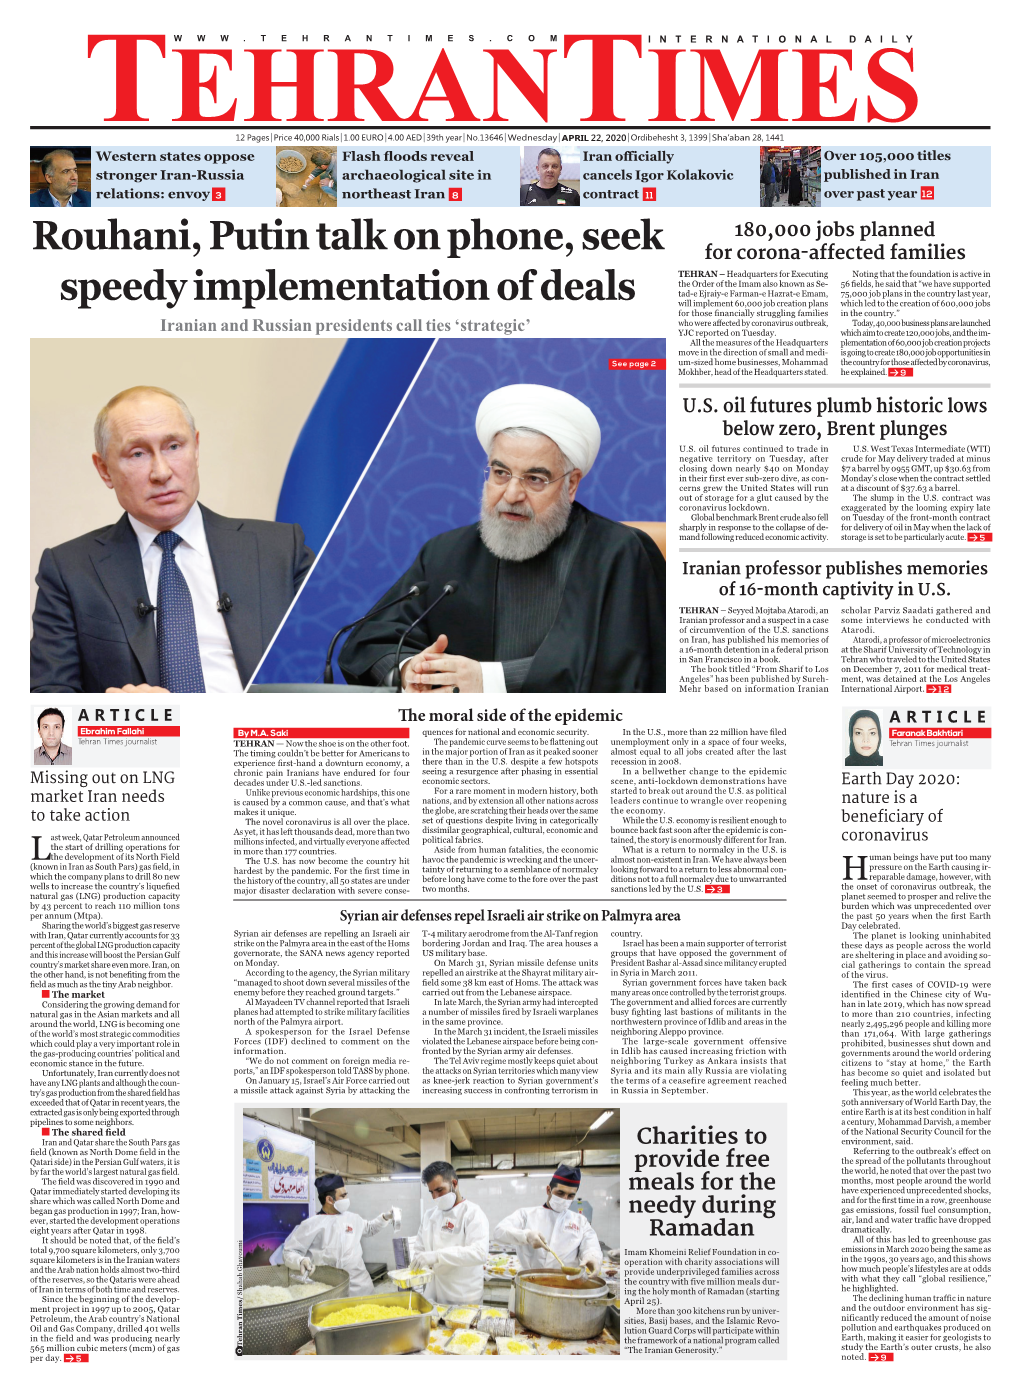 Rouhani, Putin Talk on Phone, Seek Speedy Implementation of Deals